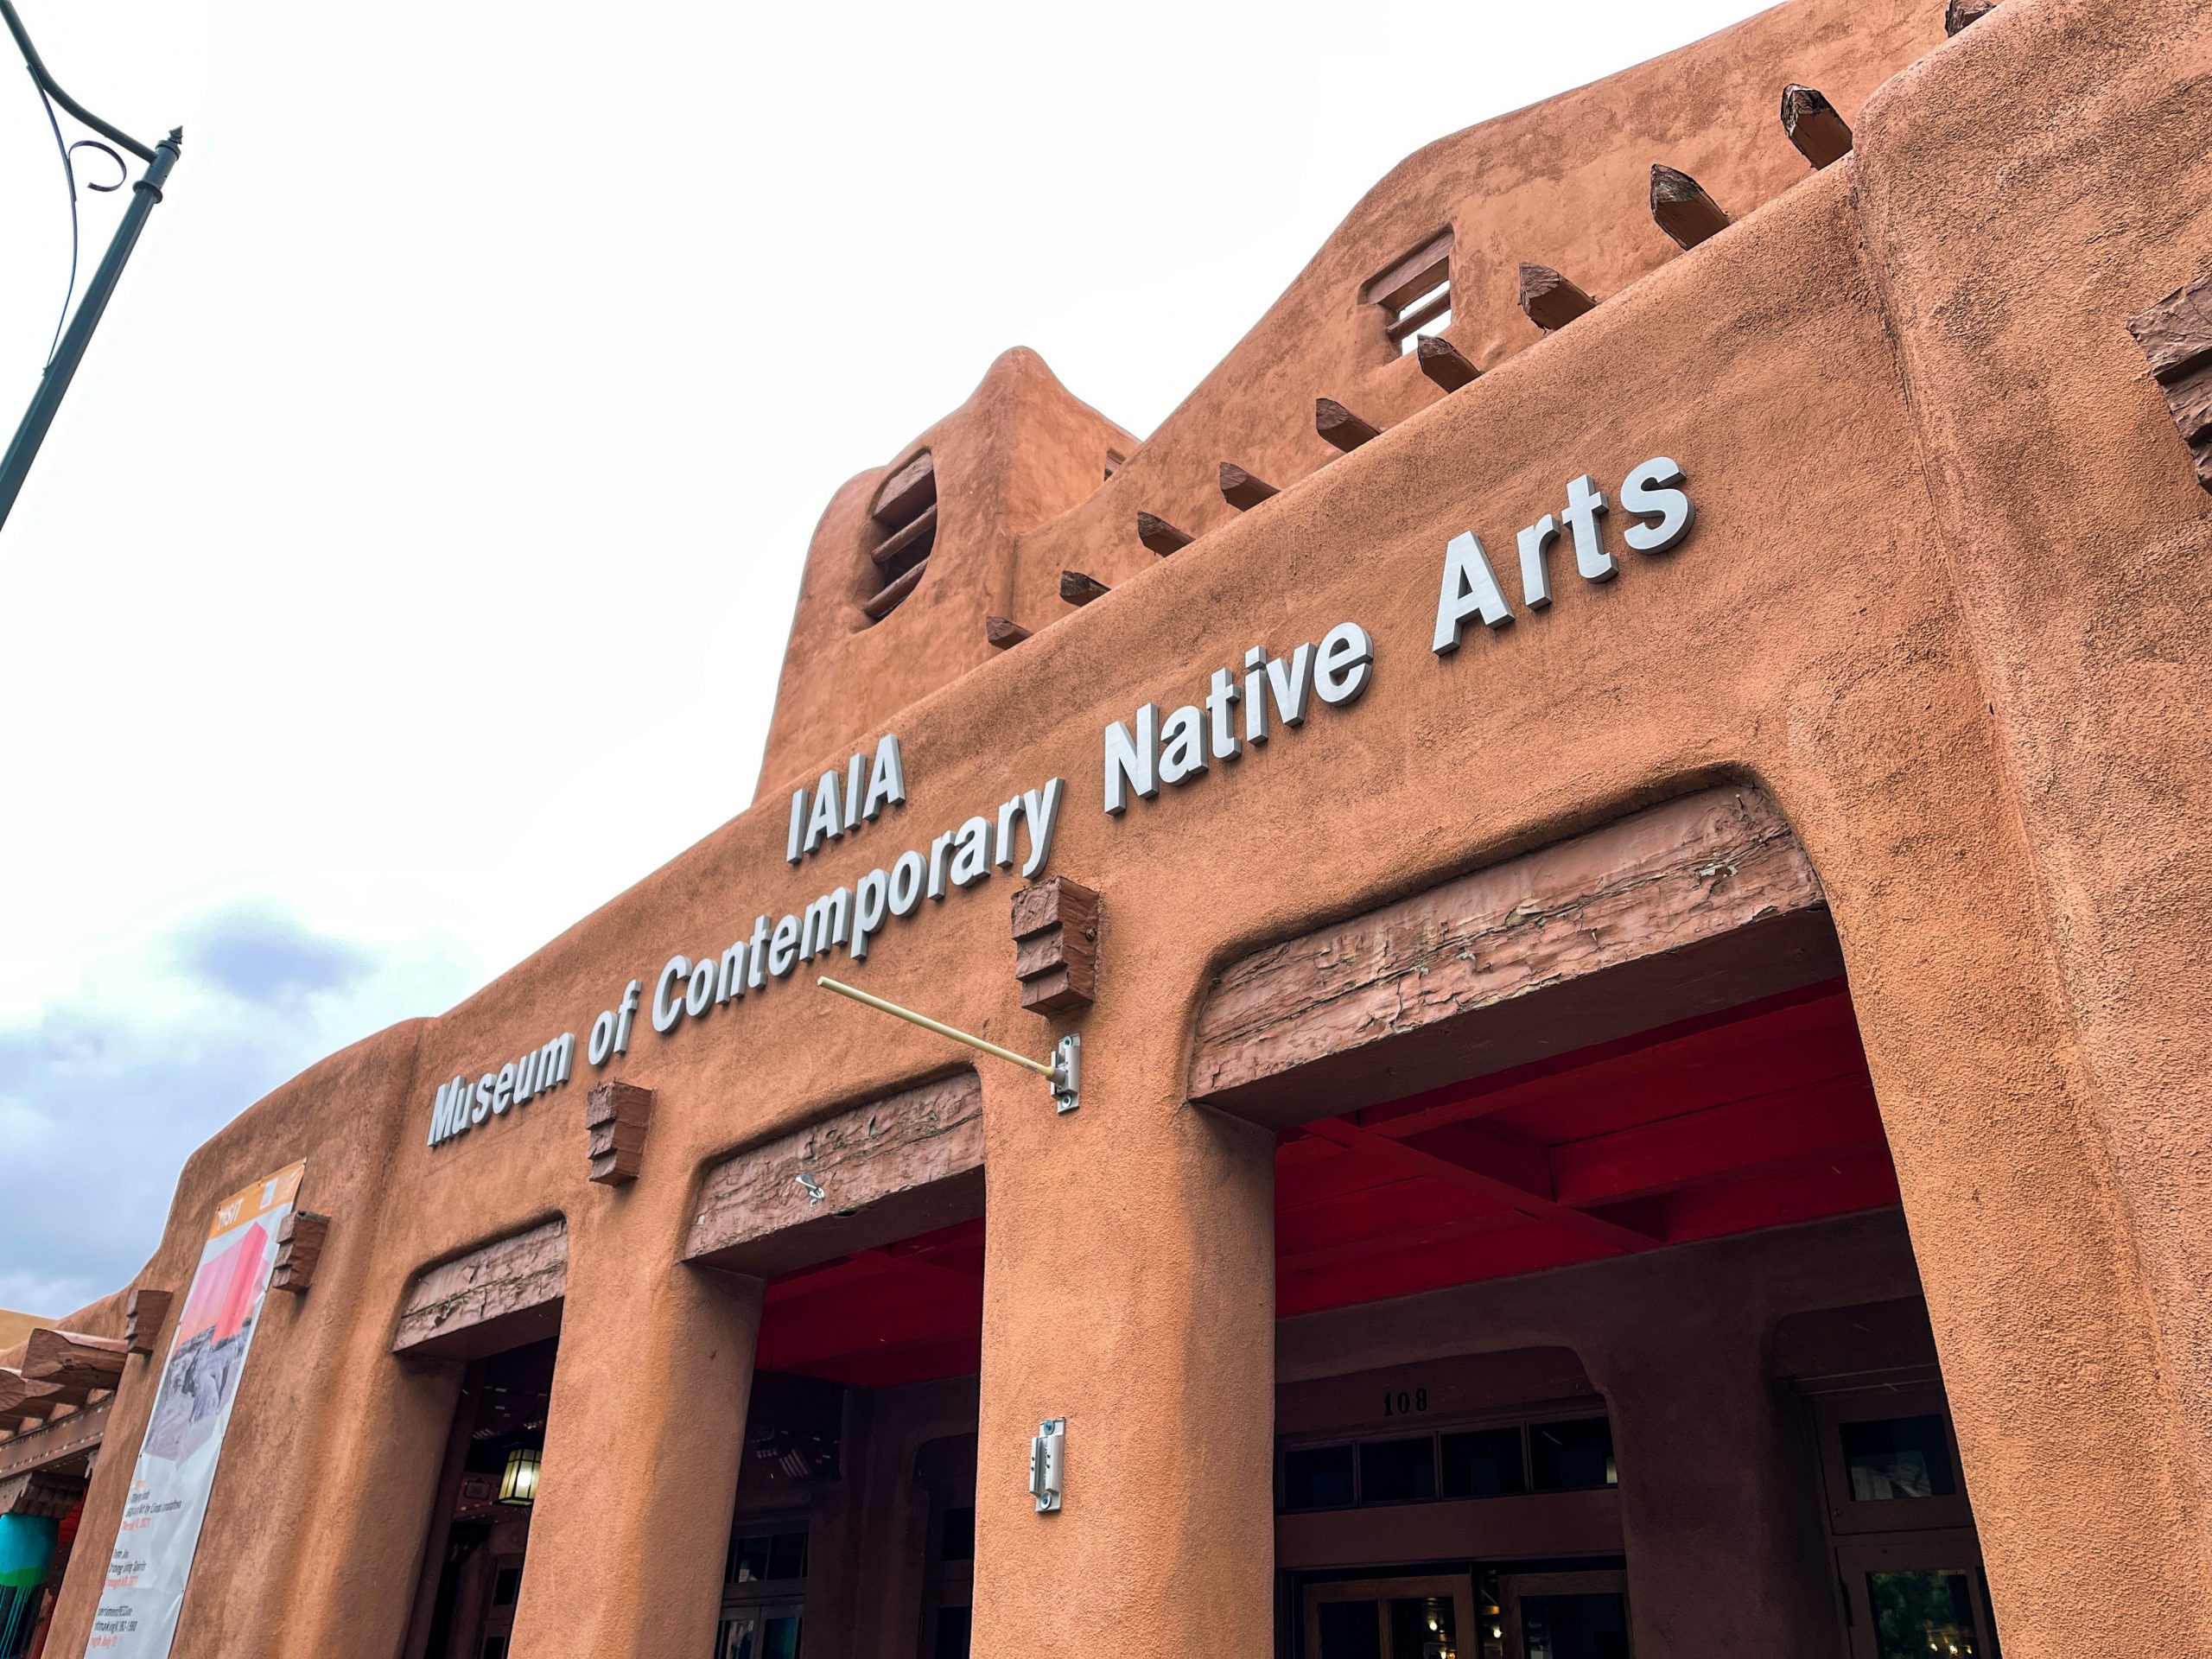 IAIA Museum of Contemporary Native Arts